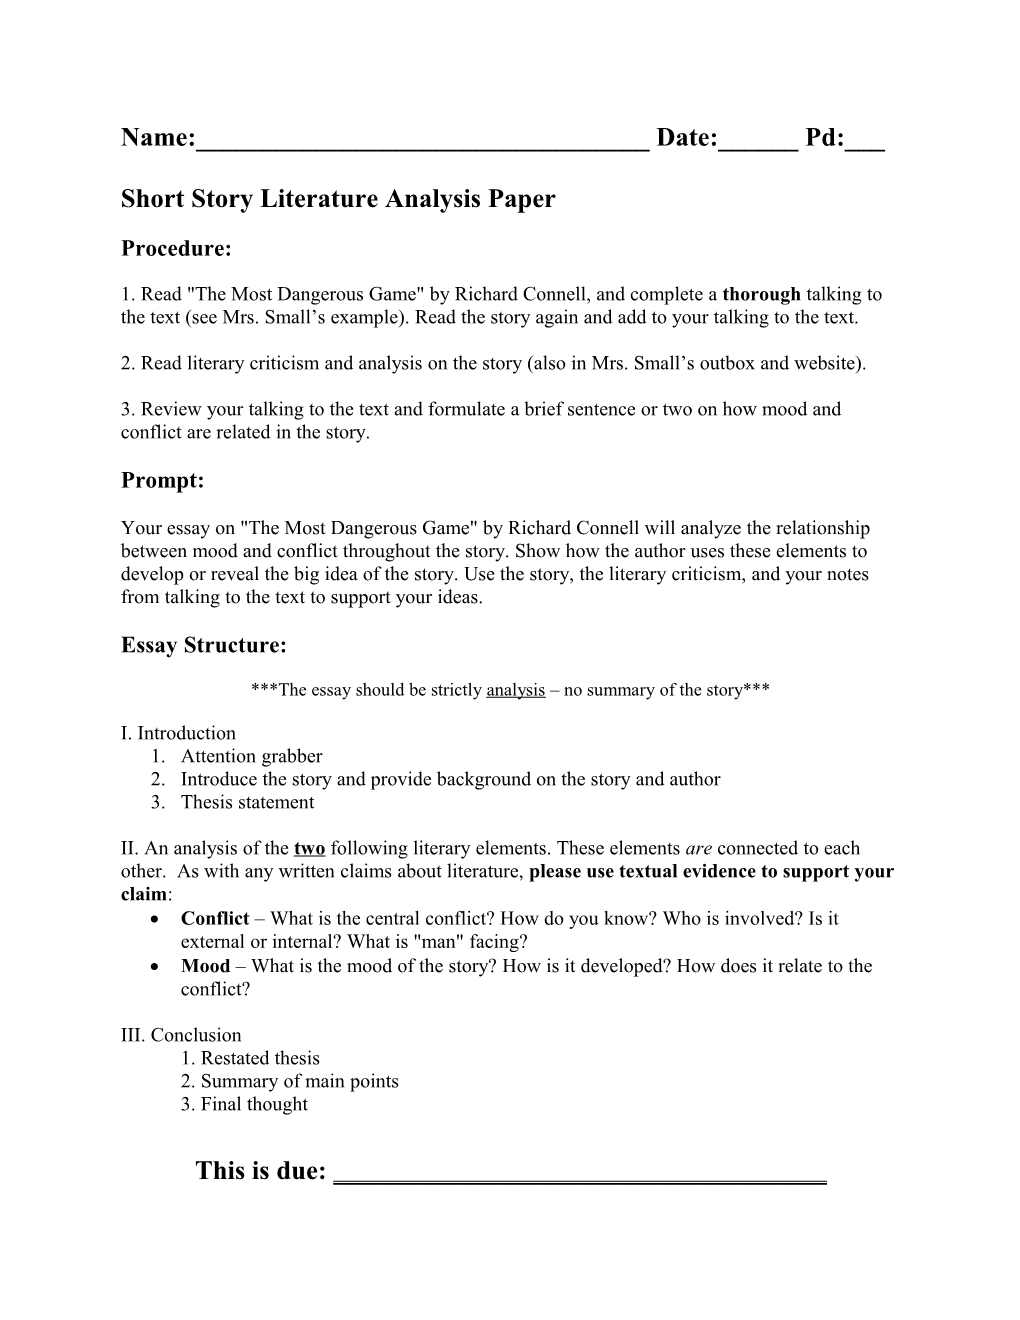 Short Story Literature Analysis Paper